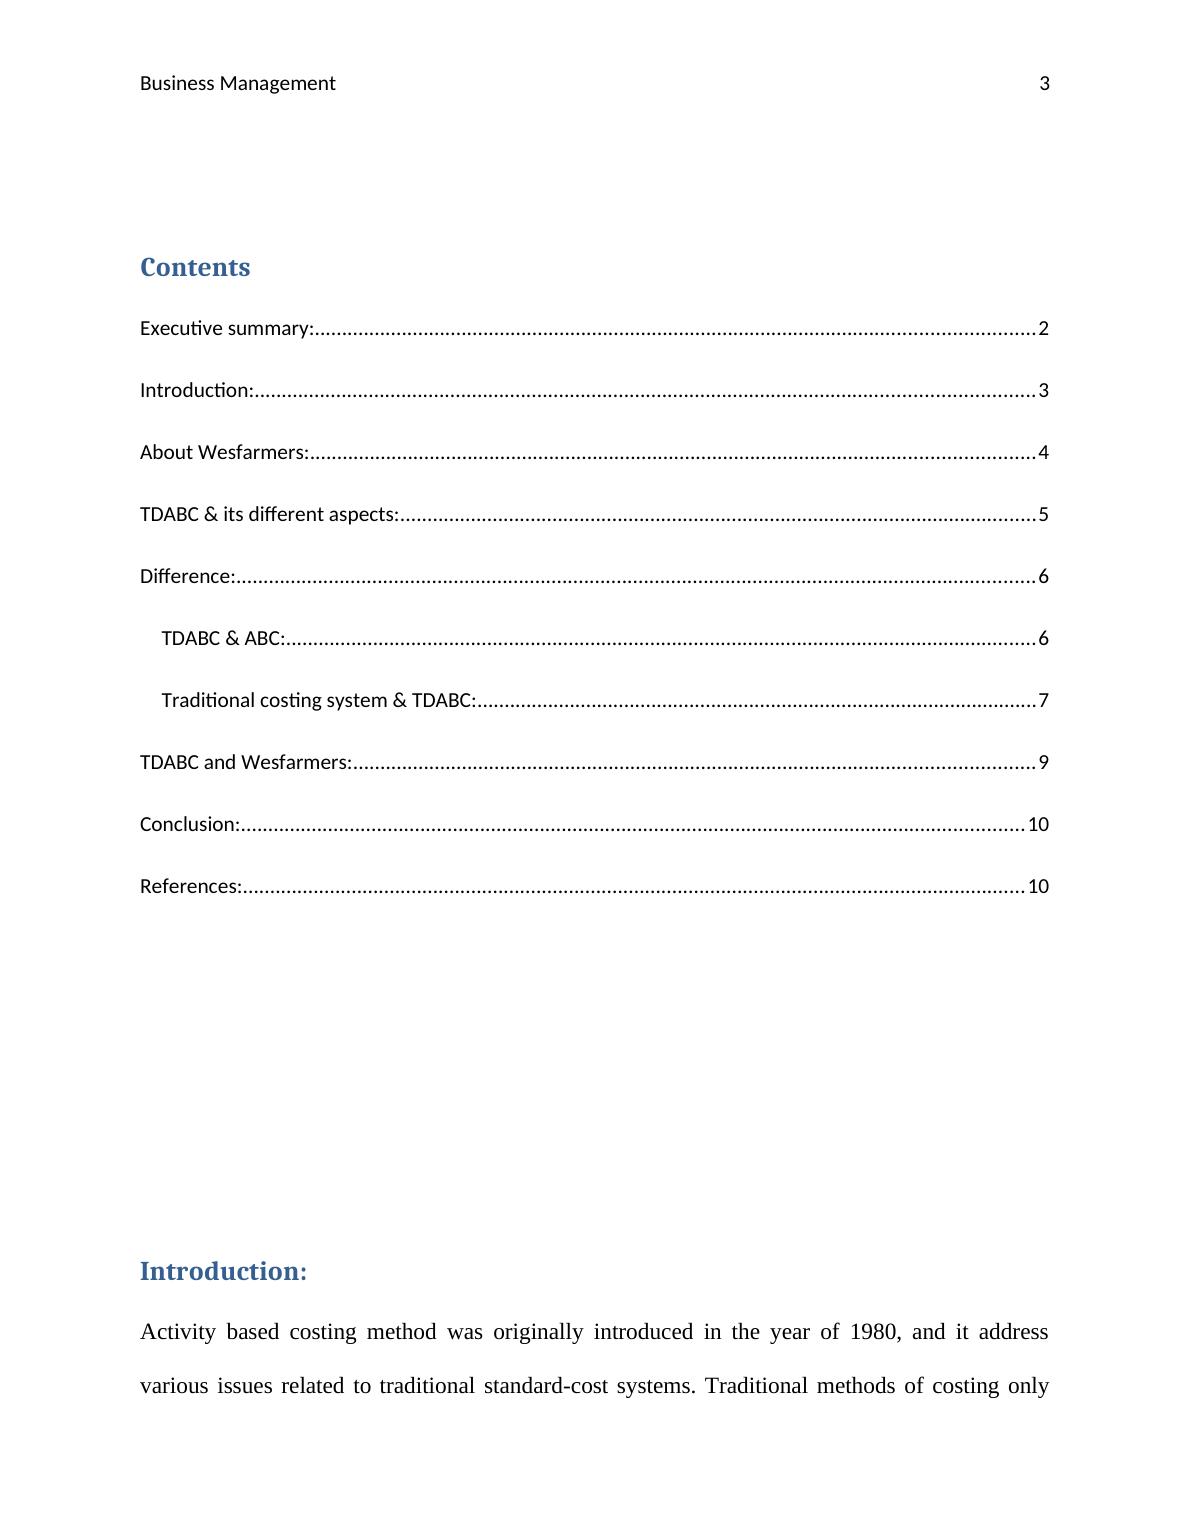 Report on TDABC model in Private Organization_3